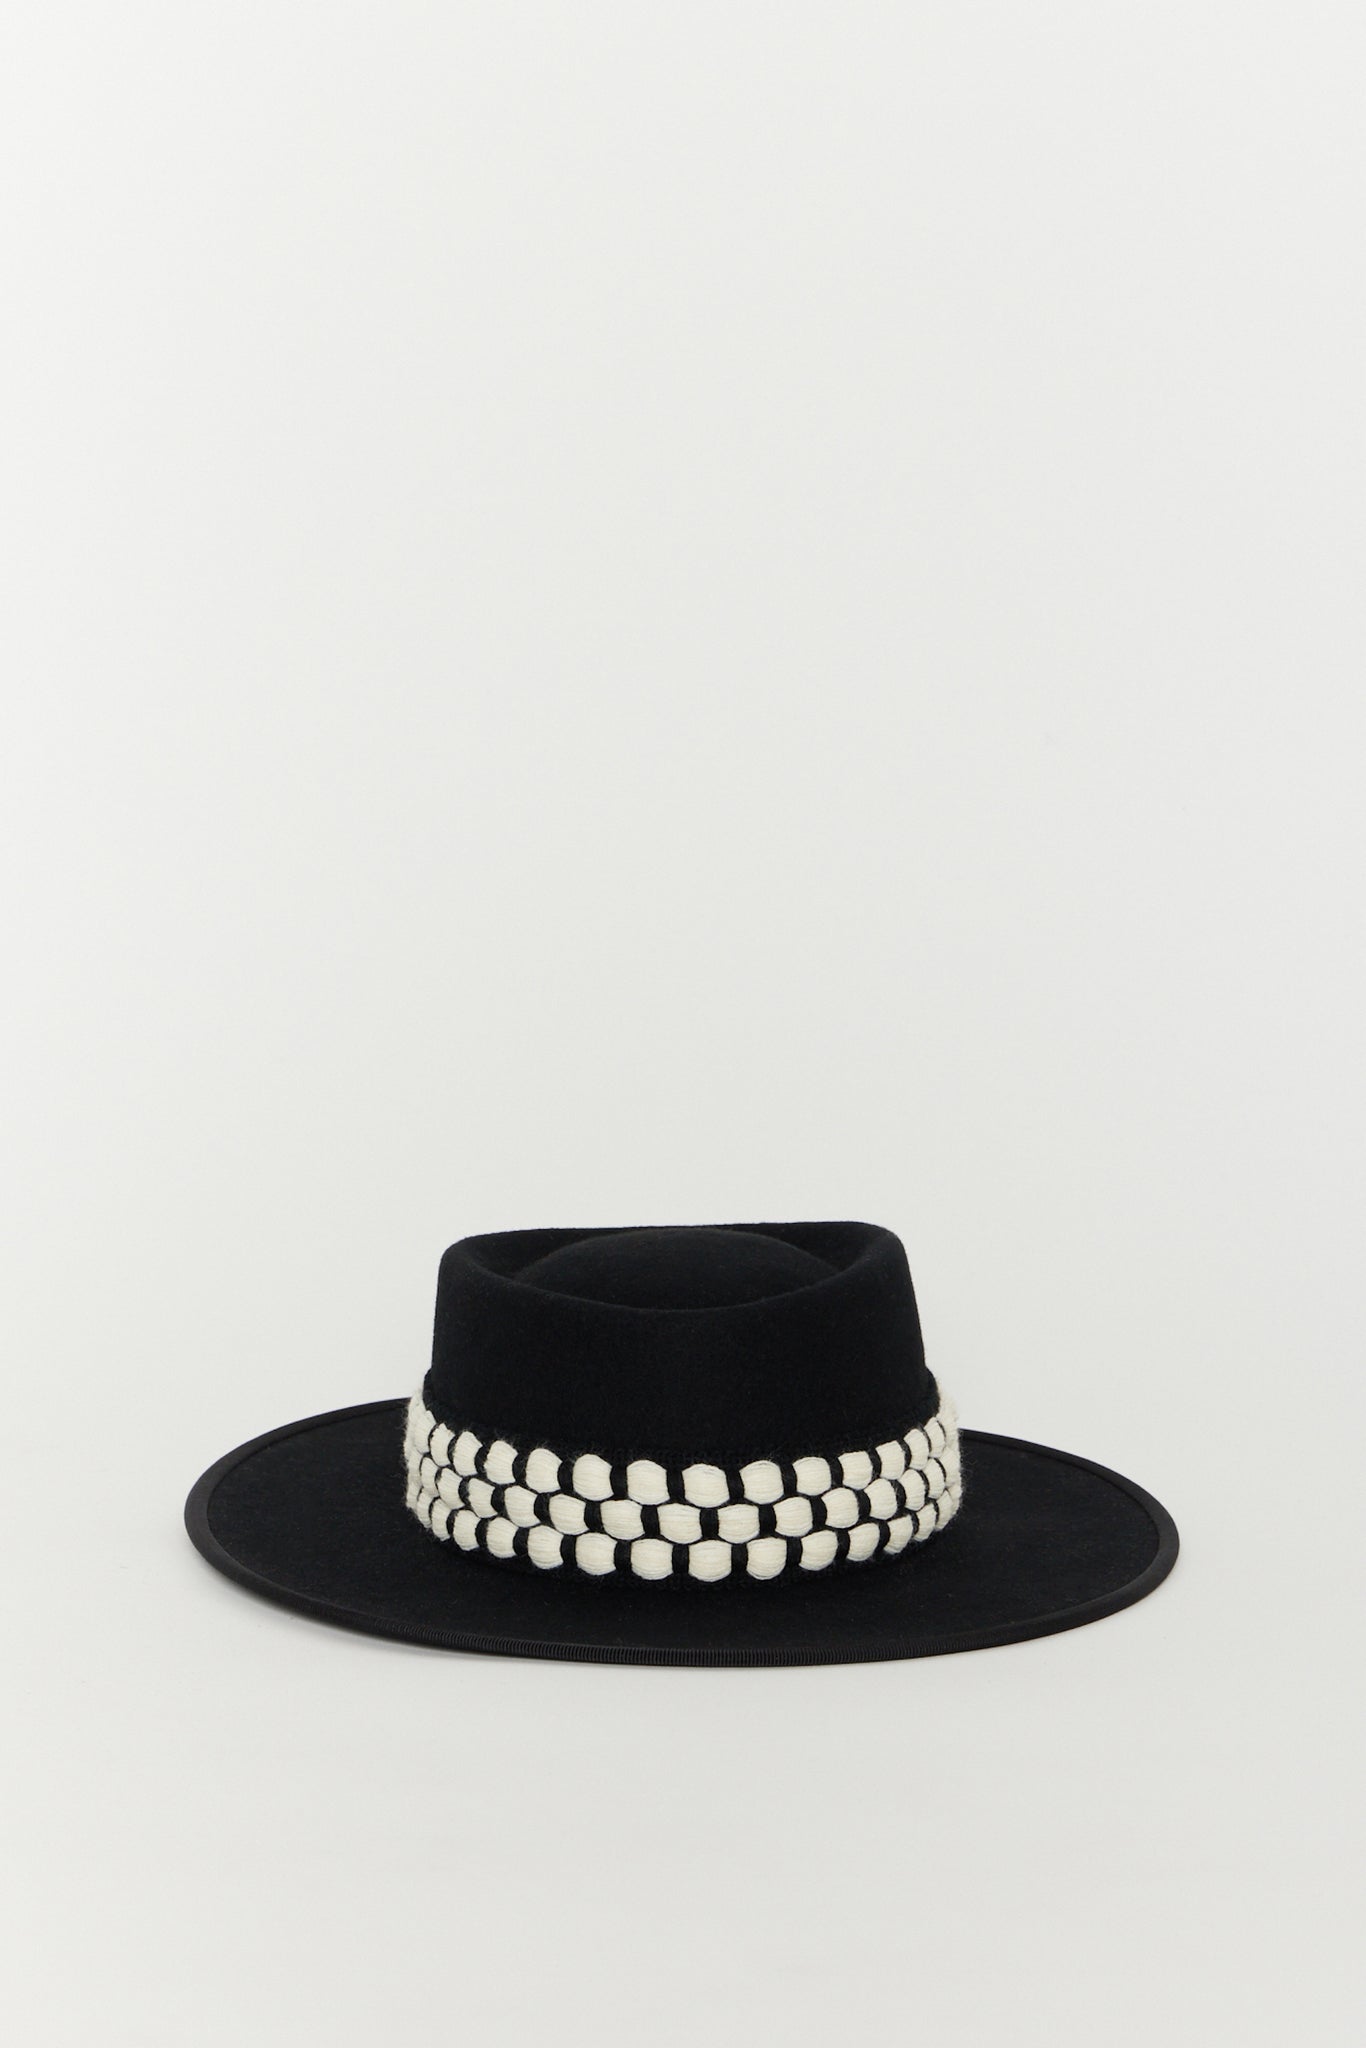 Black Felt Wide-Brim Hat with White Band